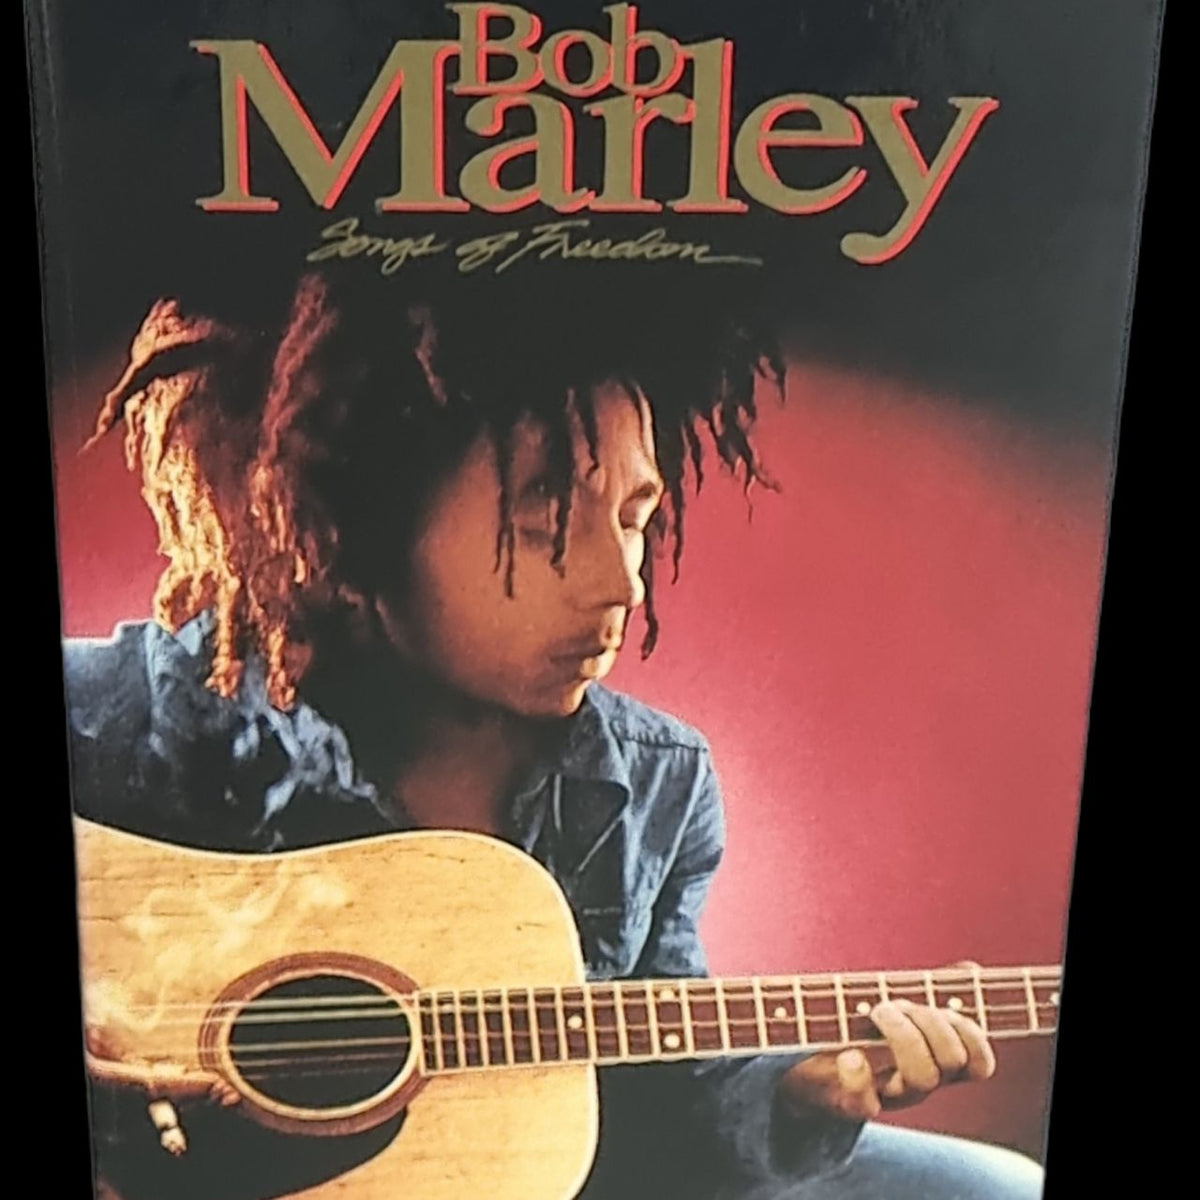 Bob Marley & The Wailers Songs Of Freedom - EX UK Cd album box set